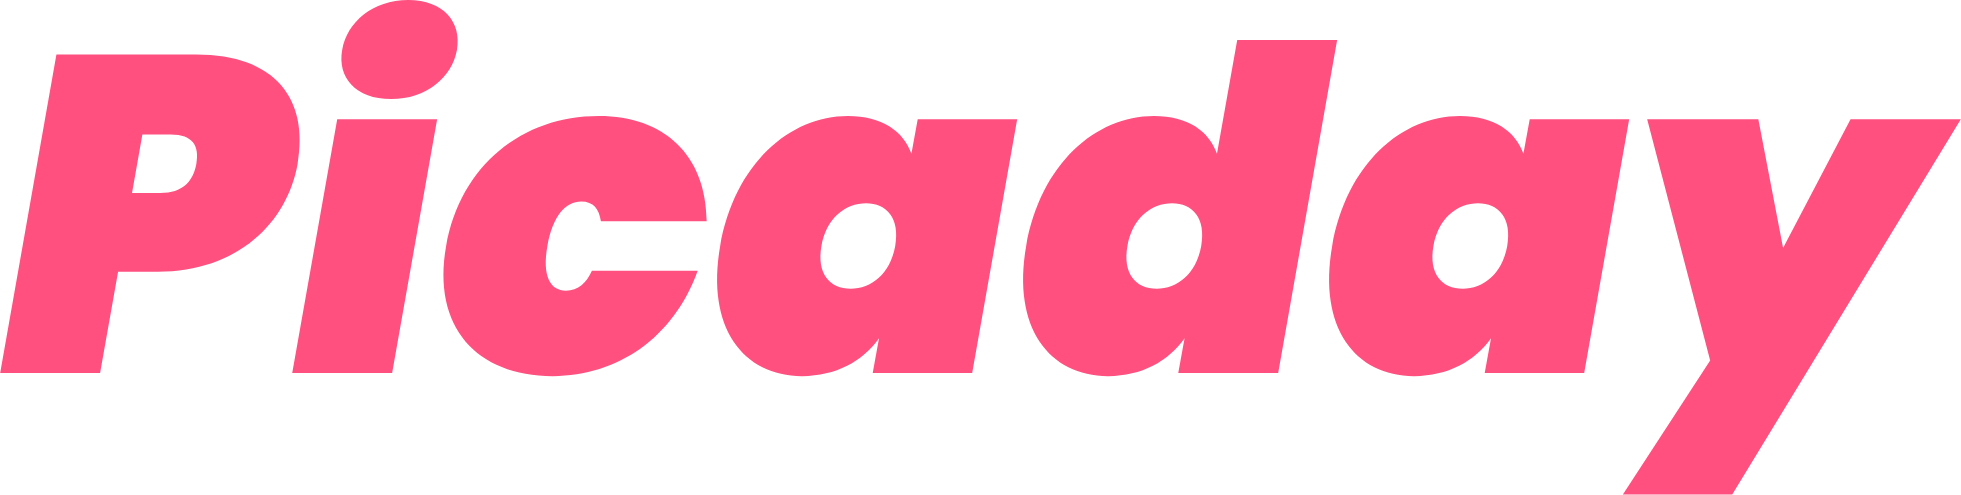 Picaday the photo game logo